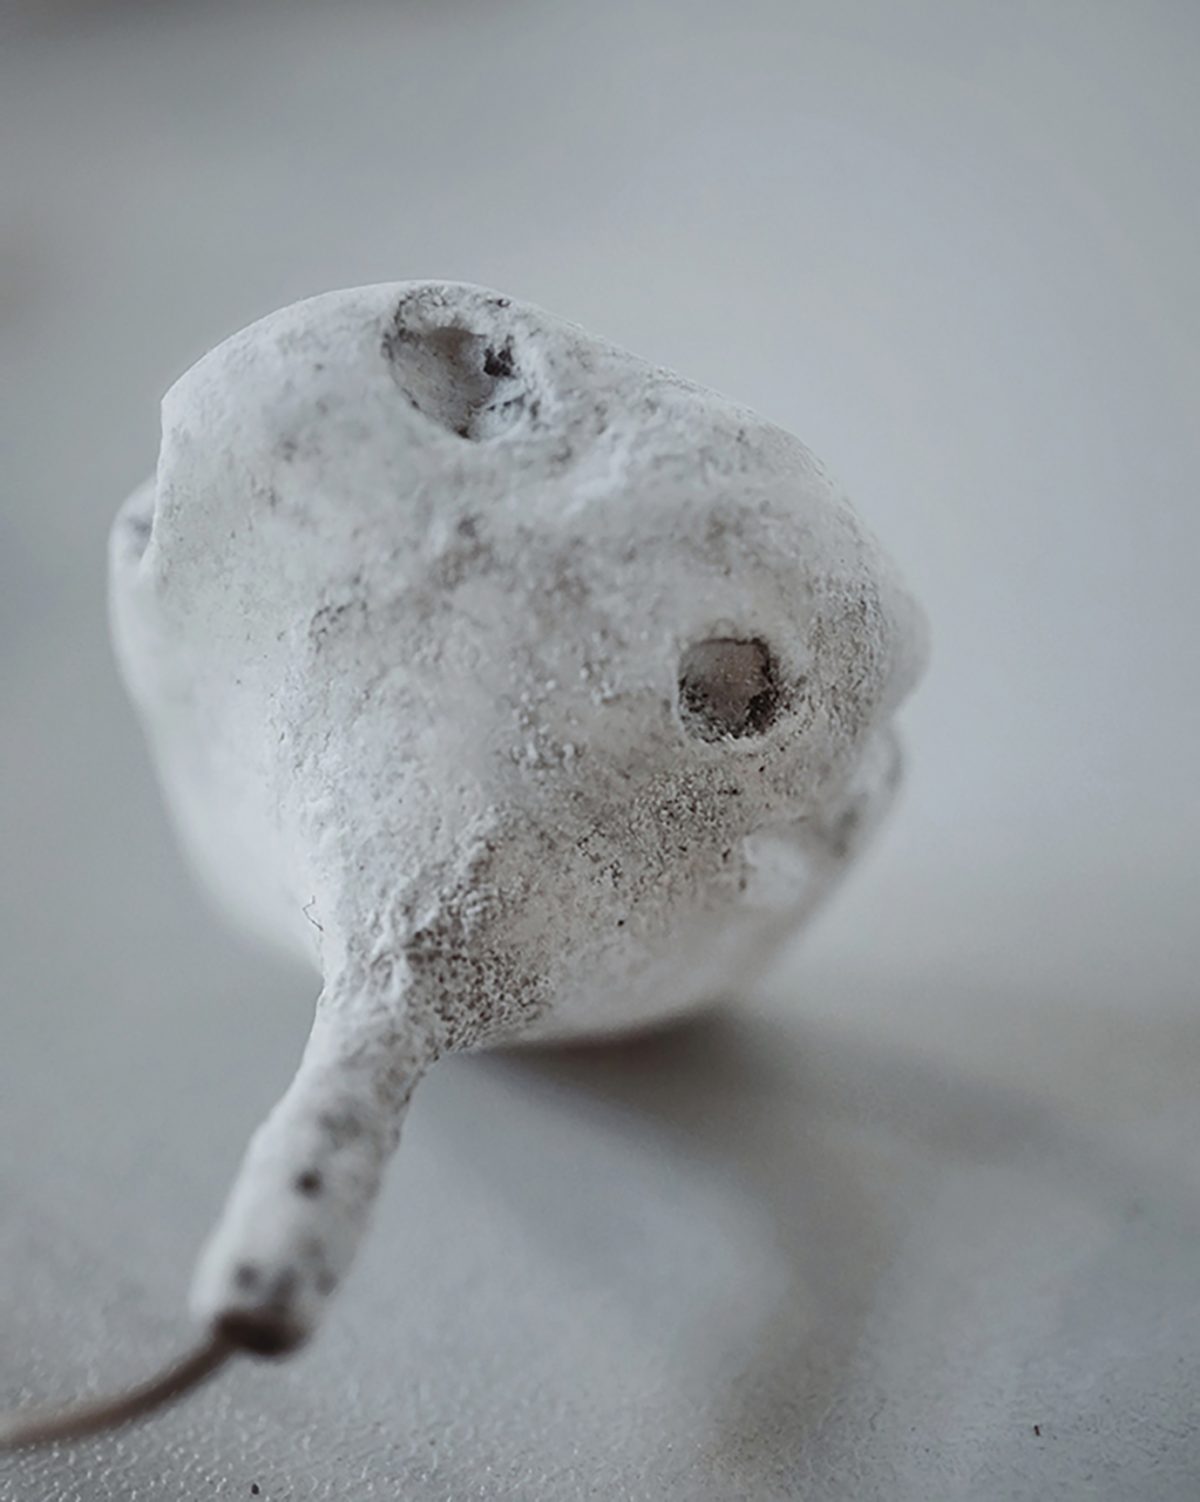 Photograph of a white porcelain sculpture shaped like an ear bud